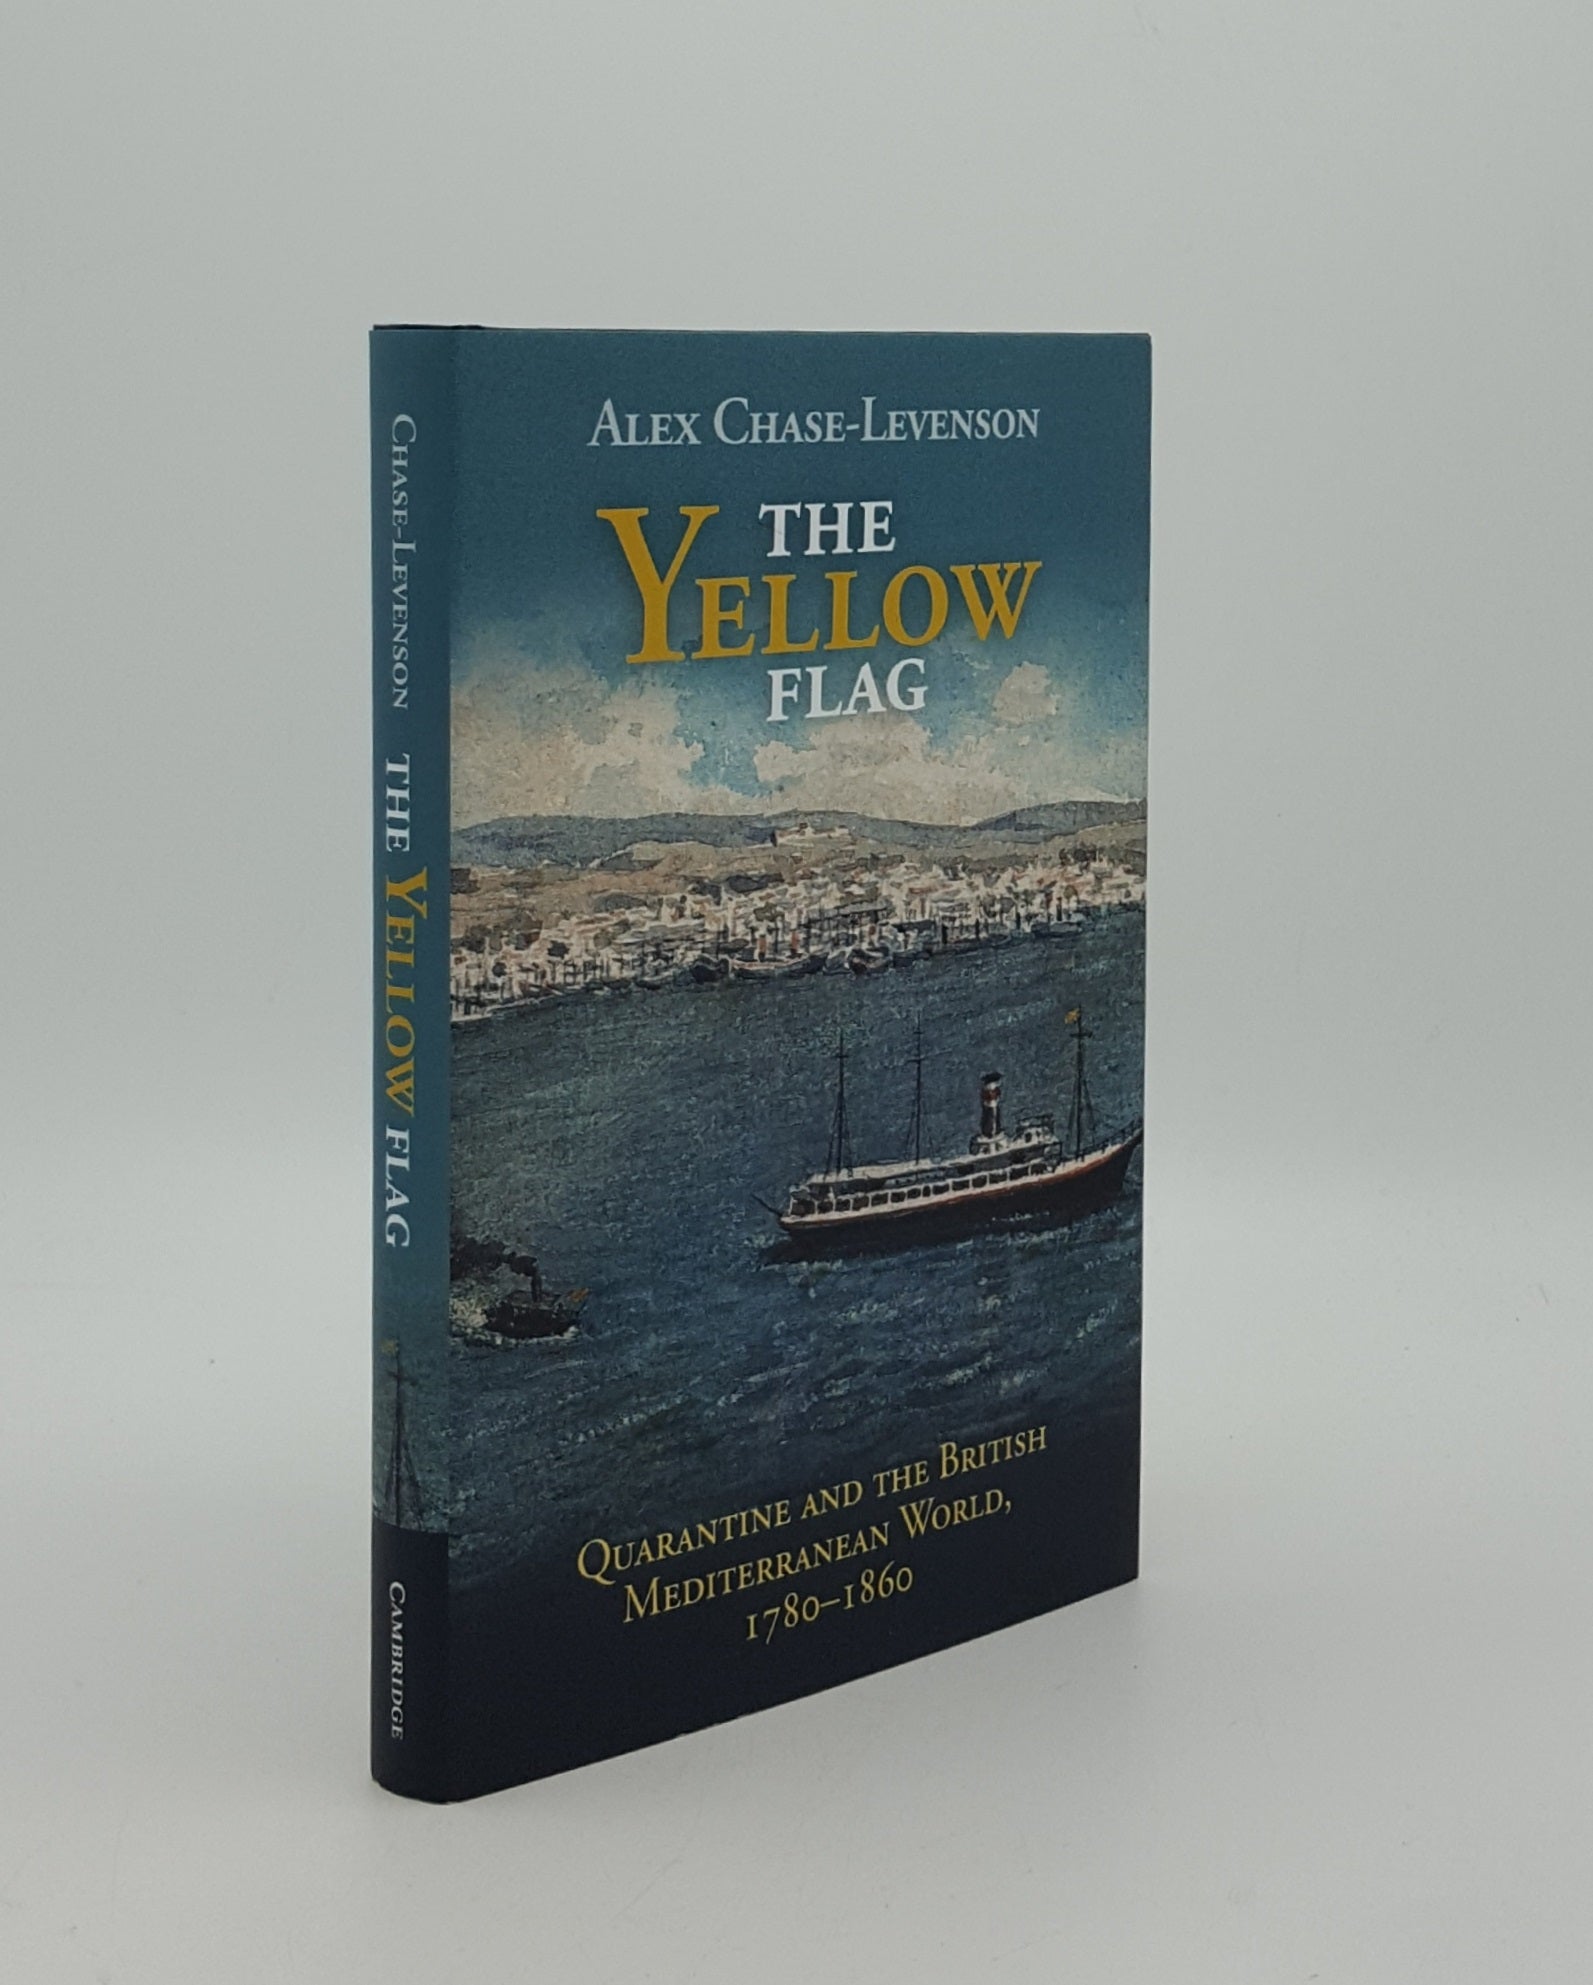 CHASE-LEVENSON Alex - The Yellow Flag Quarantine and the British Mediterranean World 1780-1860 (Global Health Histories)